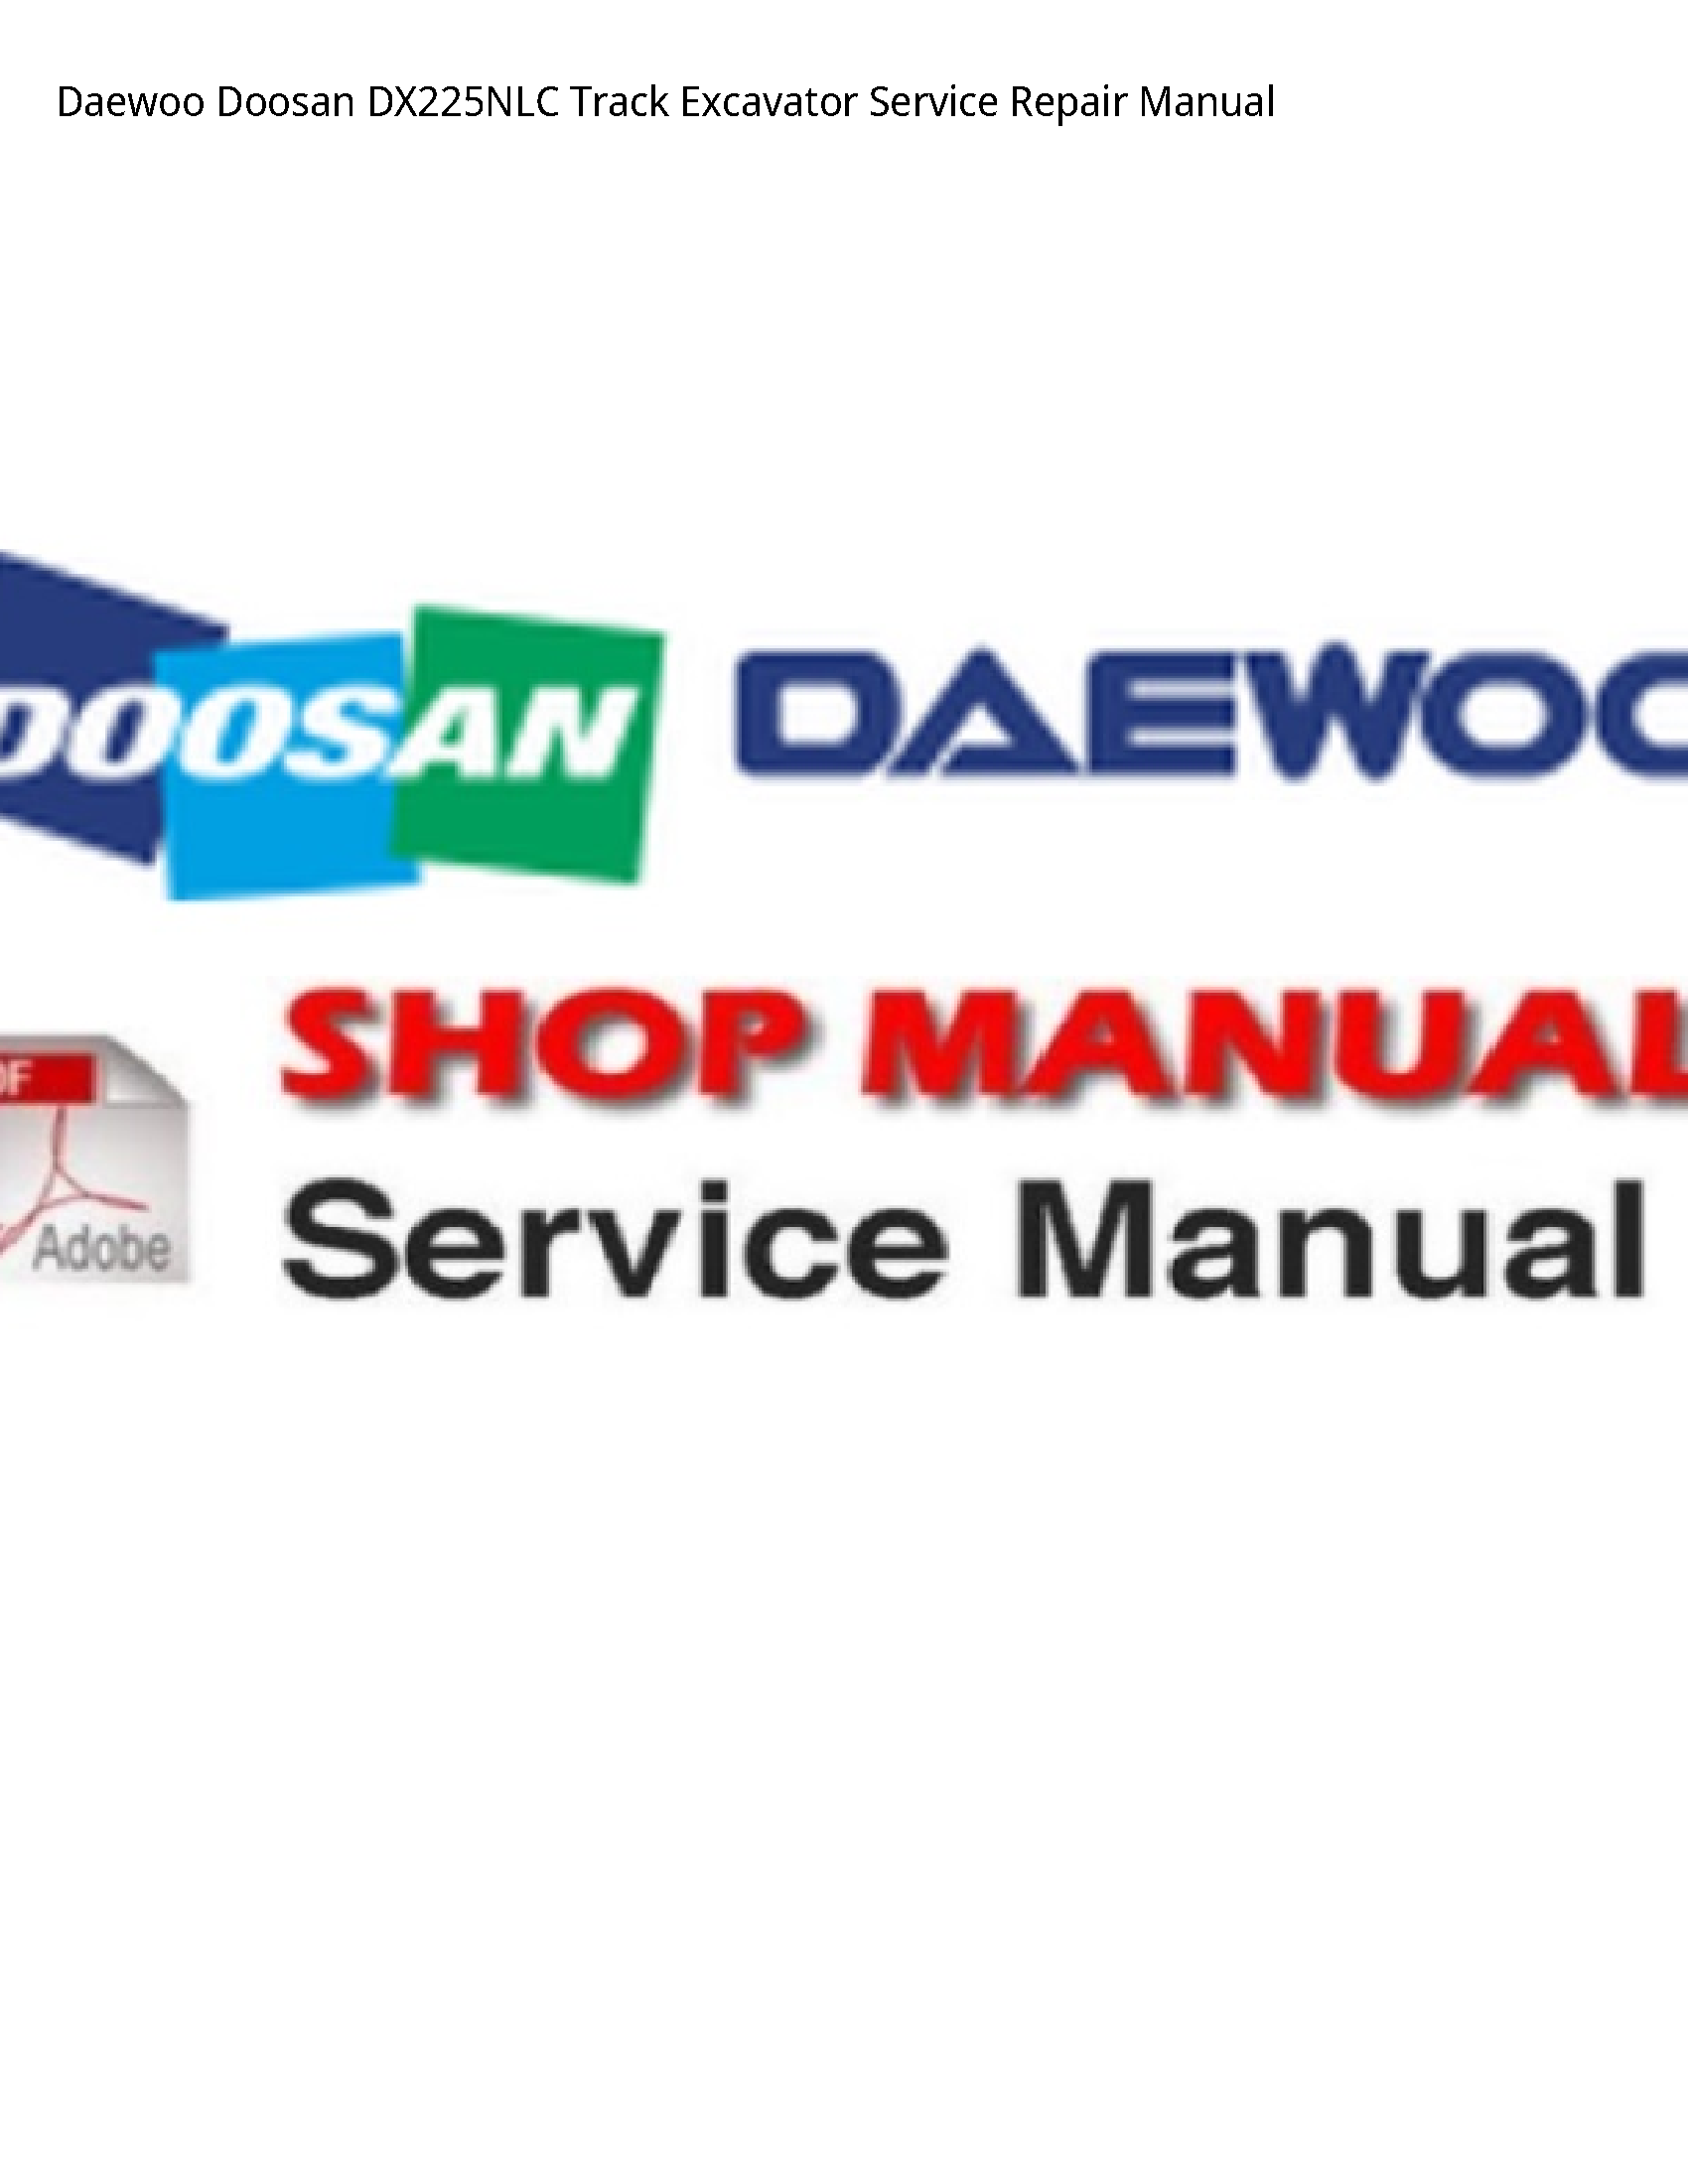 Daewoo Doosan DX225NLC Track Excavator manual